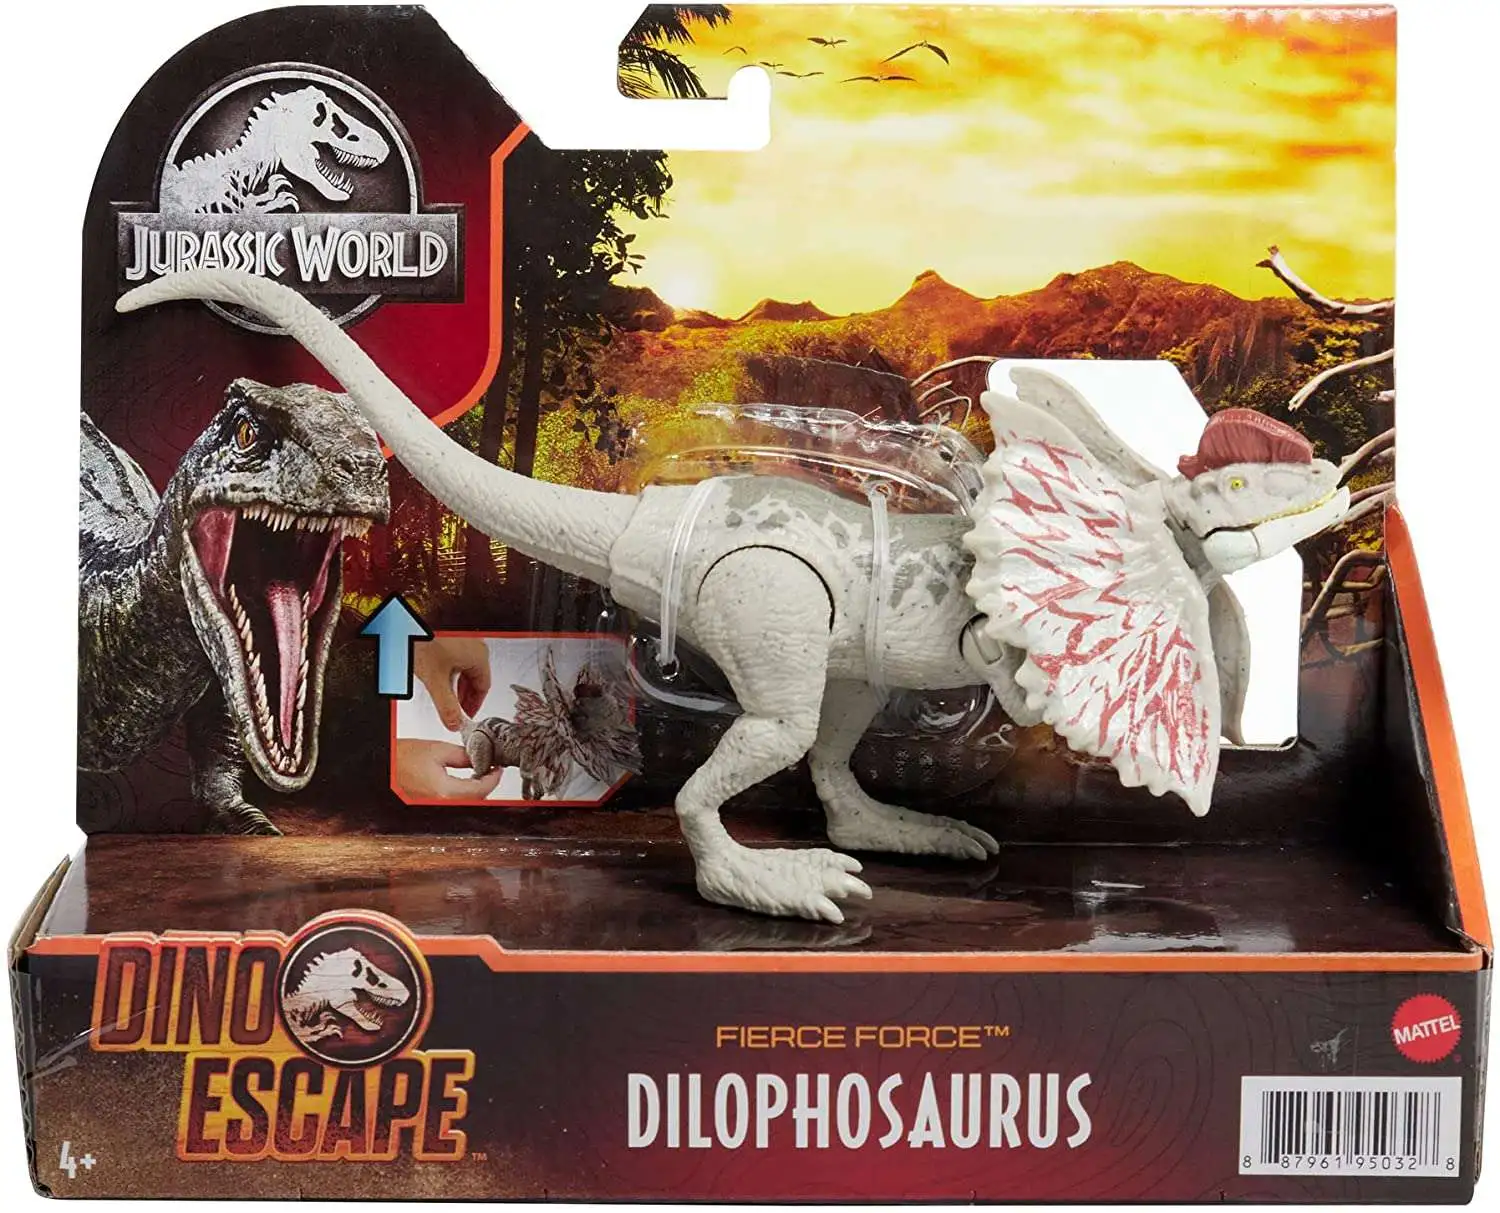 Jurassic World Camp Cretaceous Dinosaur Adventure 12 inch Action Figure for sale online 